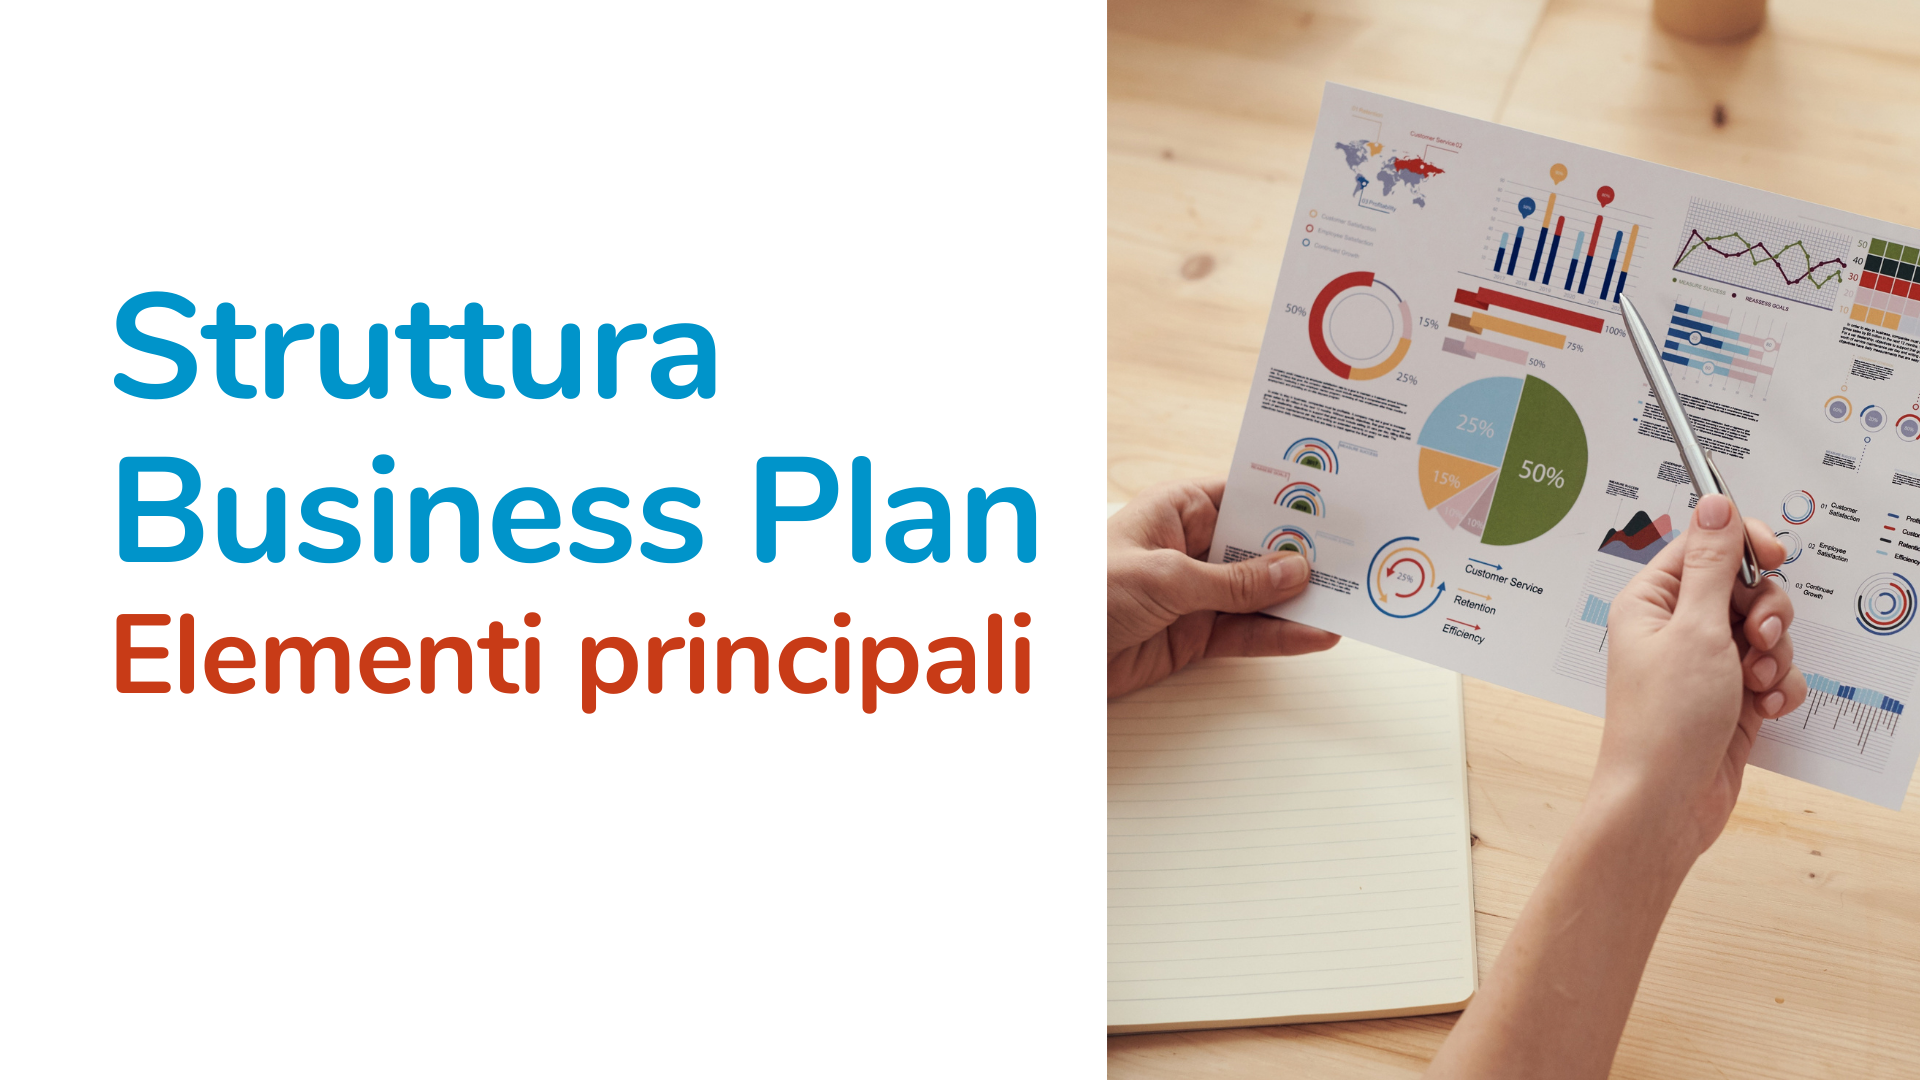 Struttura Business Plan: elementi principali